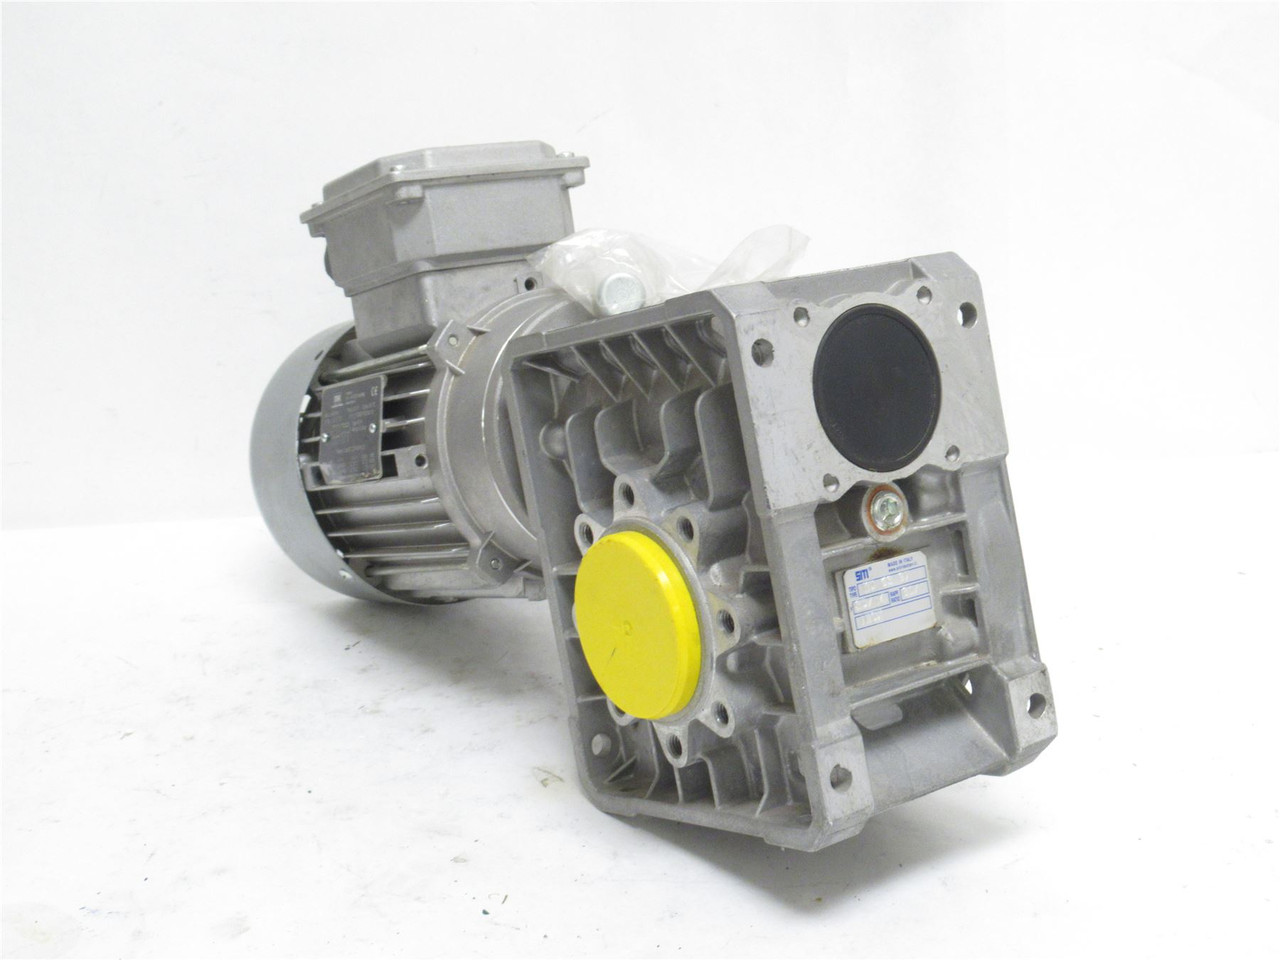 SITI MU 63 67; AC Gearmotor 80:1 Ratio 0.44kW; 460V; 3PH; 60Hz